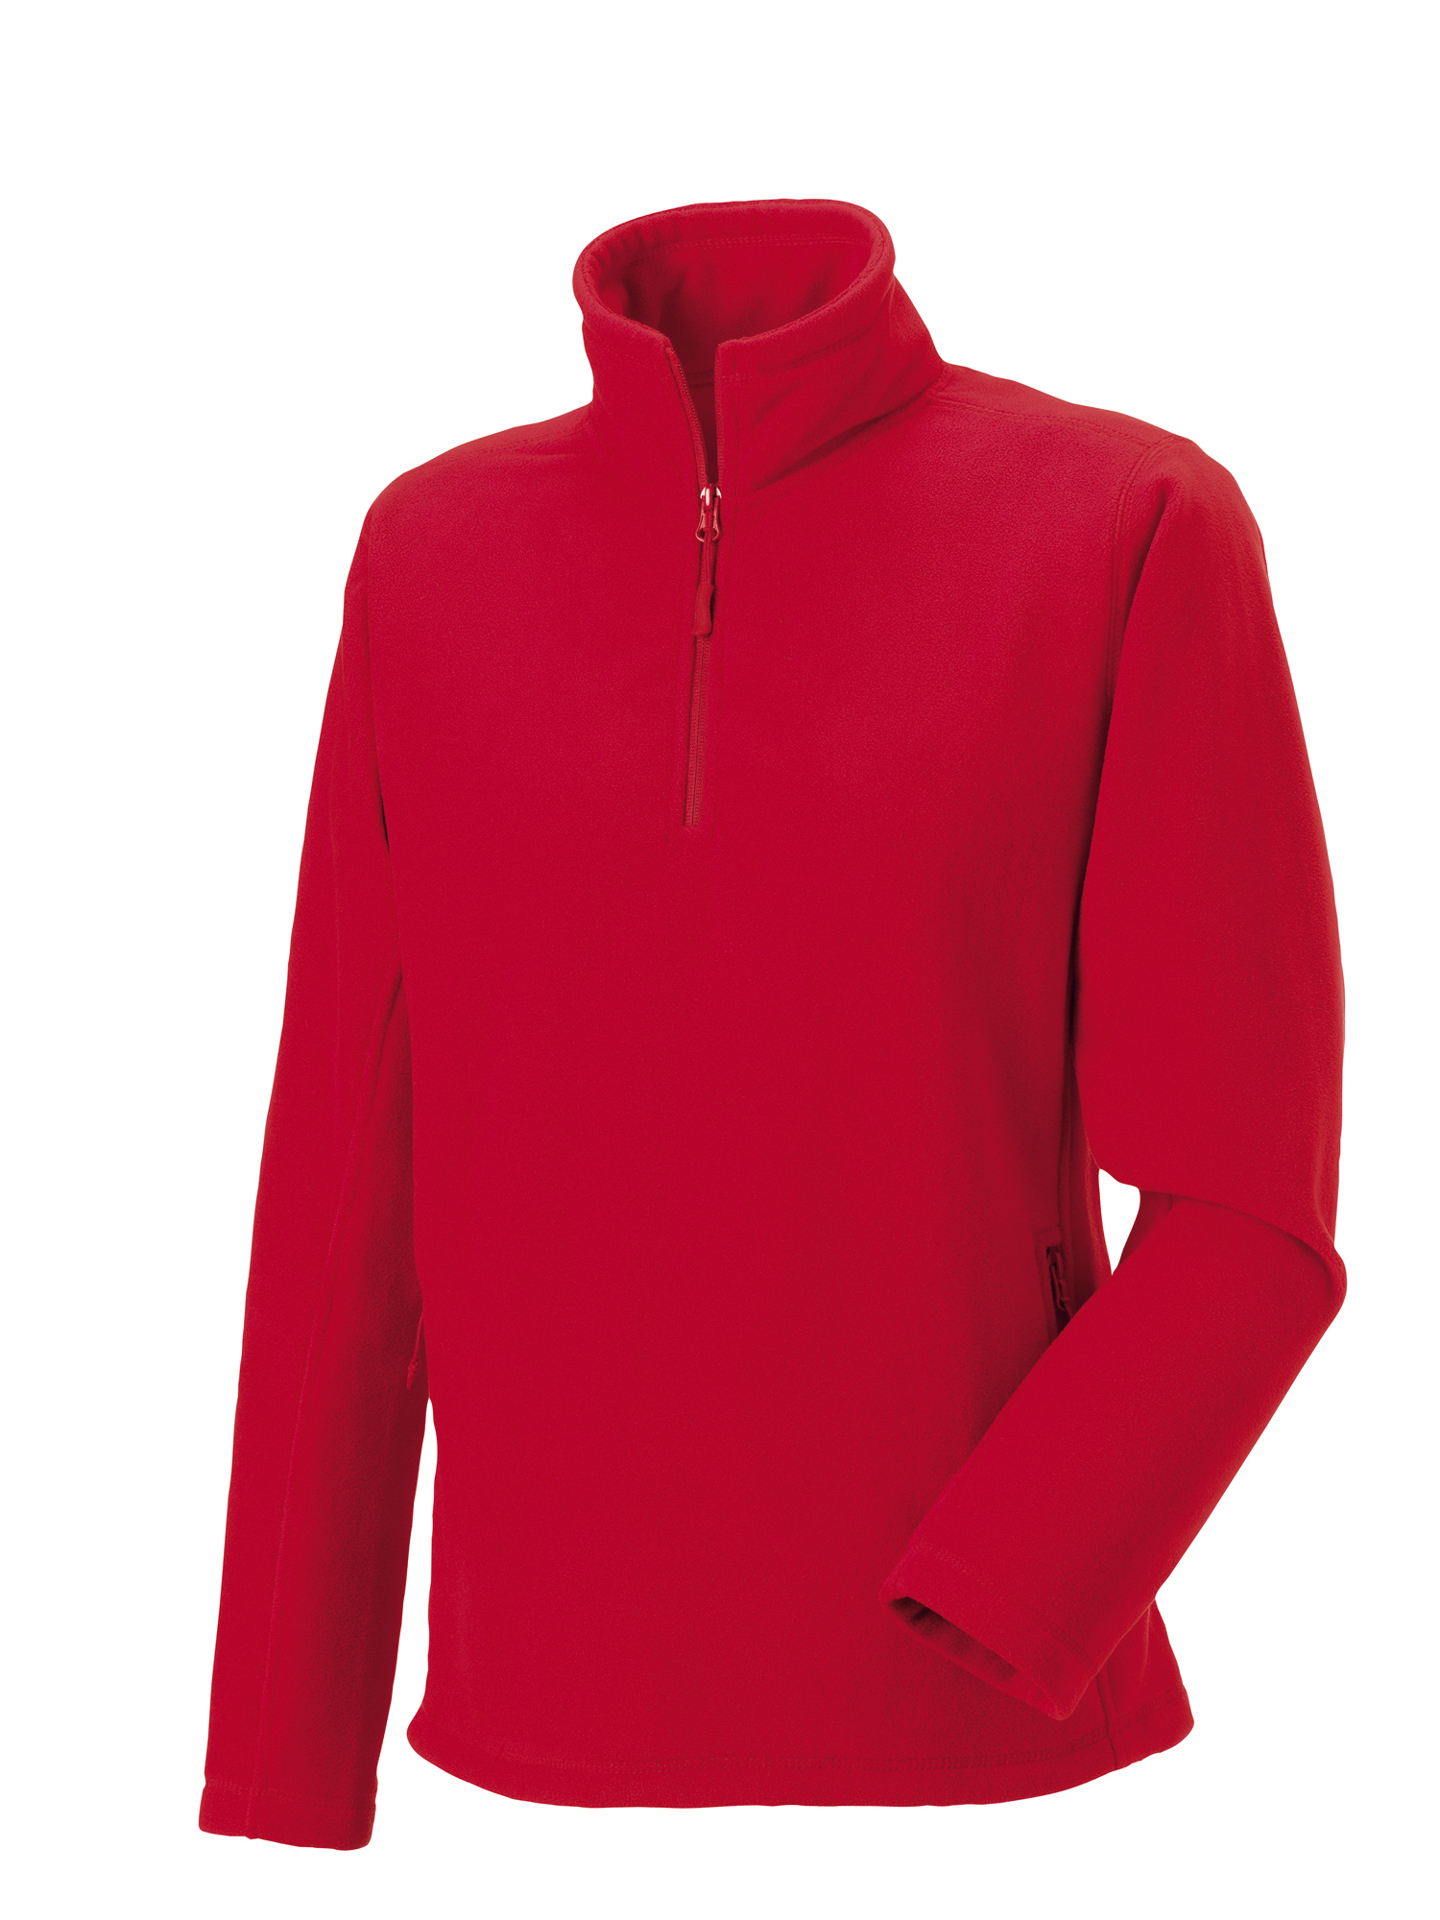 1/4 zip outdoor fleece in red with cadet collar and pockets